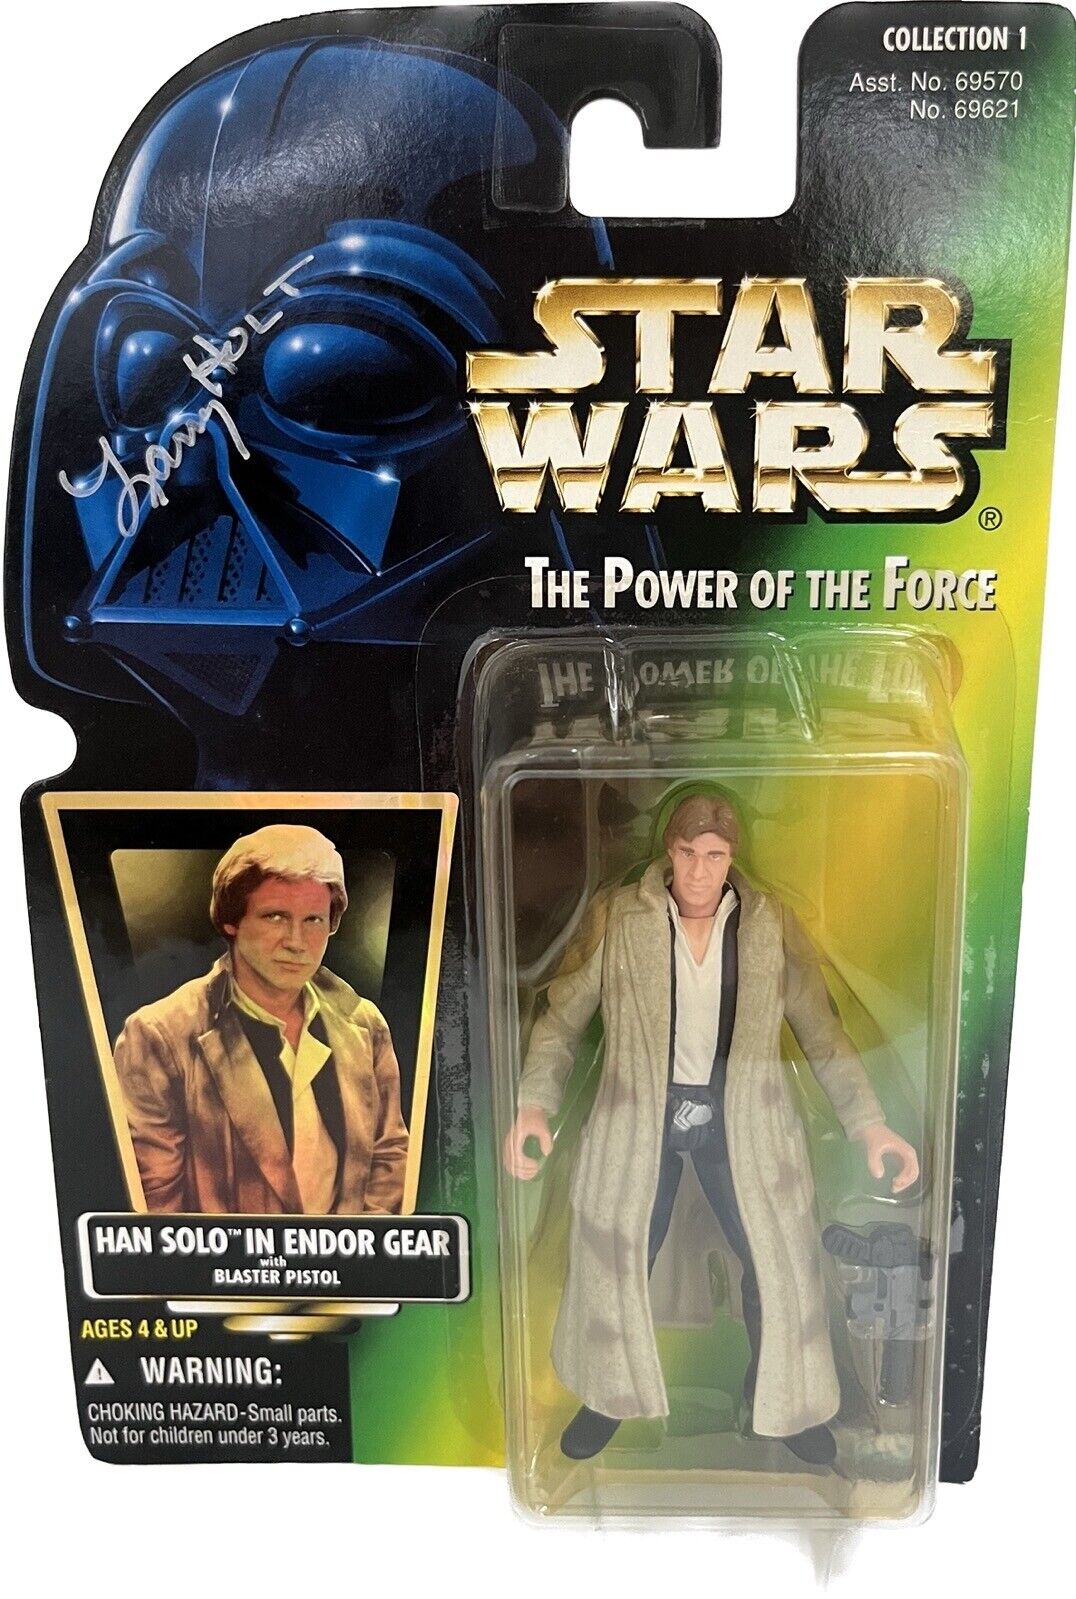 Larry Holt Stuntman Han Solo Star Wars ROTJ Signed POTF Action Figure BAS